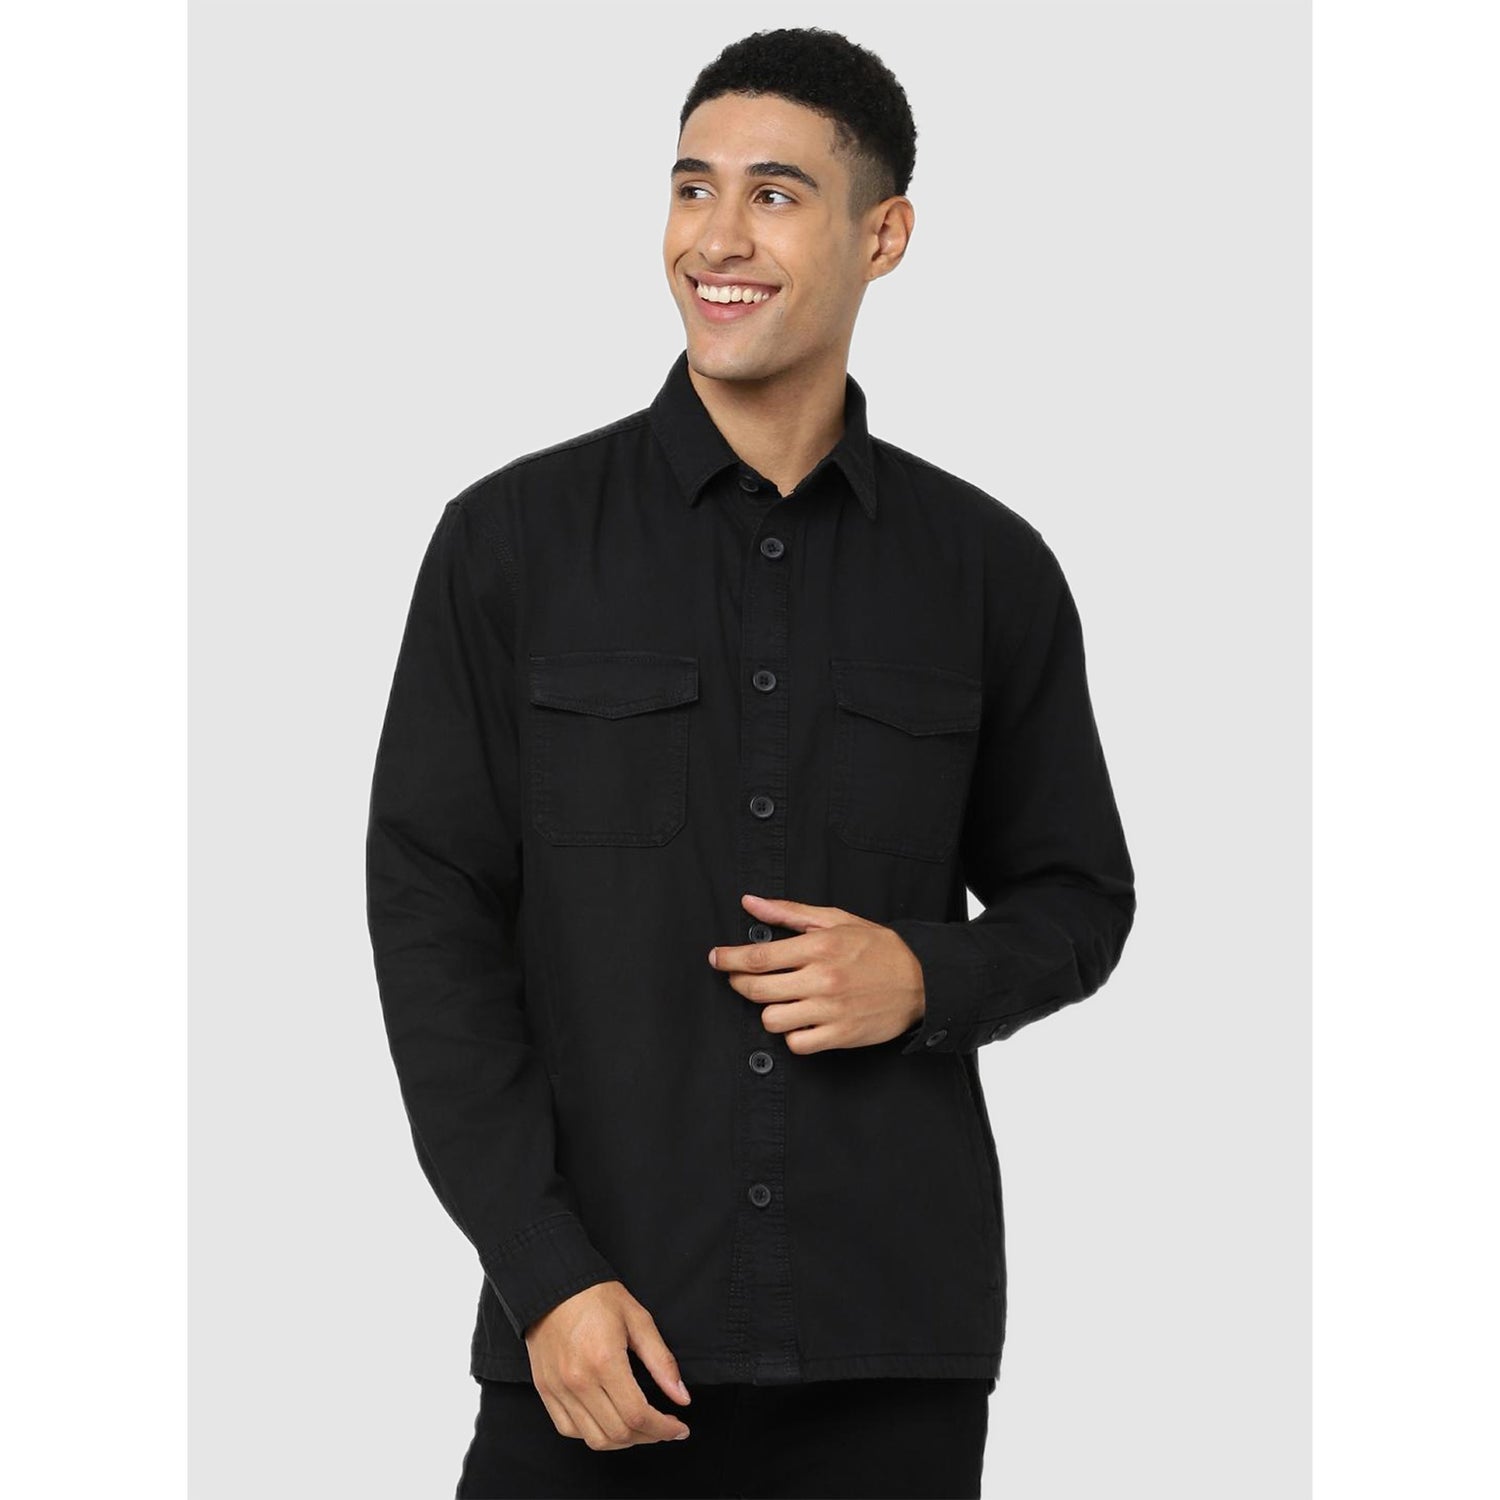 Black Solid Regular Fit Classic Casual Shirt (BAOVERWASH)